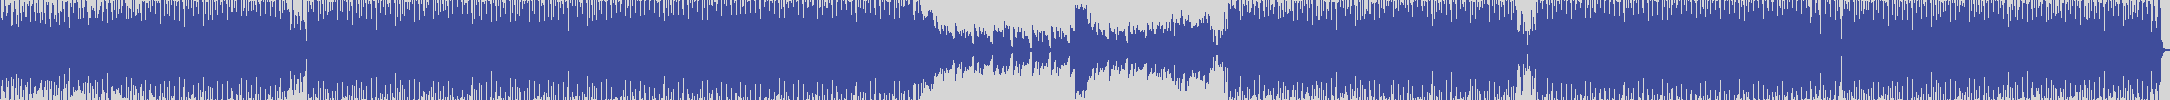 nf_boyz_records [NFY022] Ibeeza Guy - Control Doom [Original Mix] audio wave form